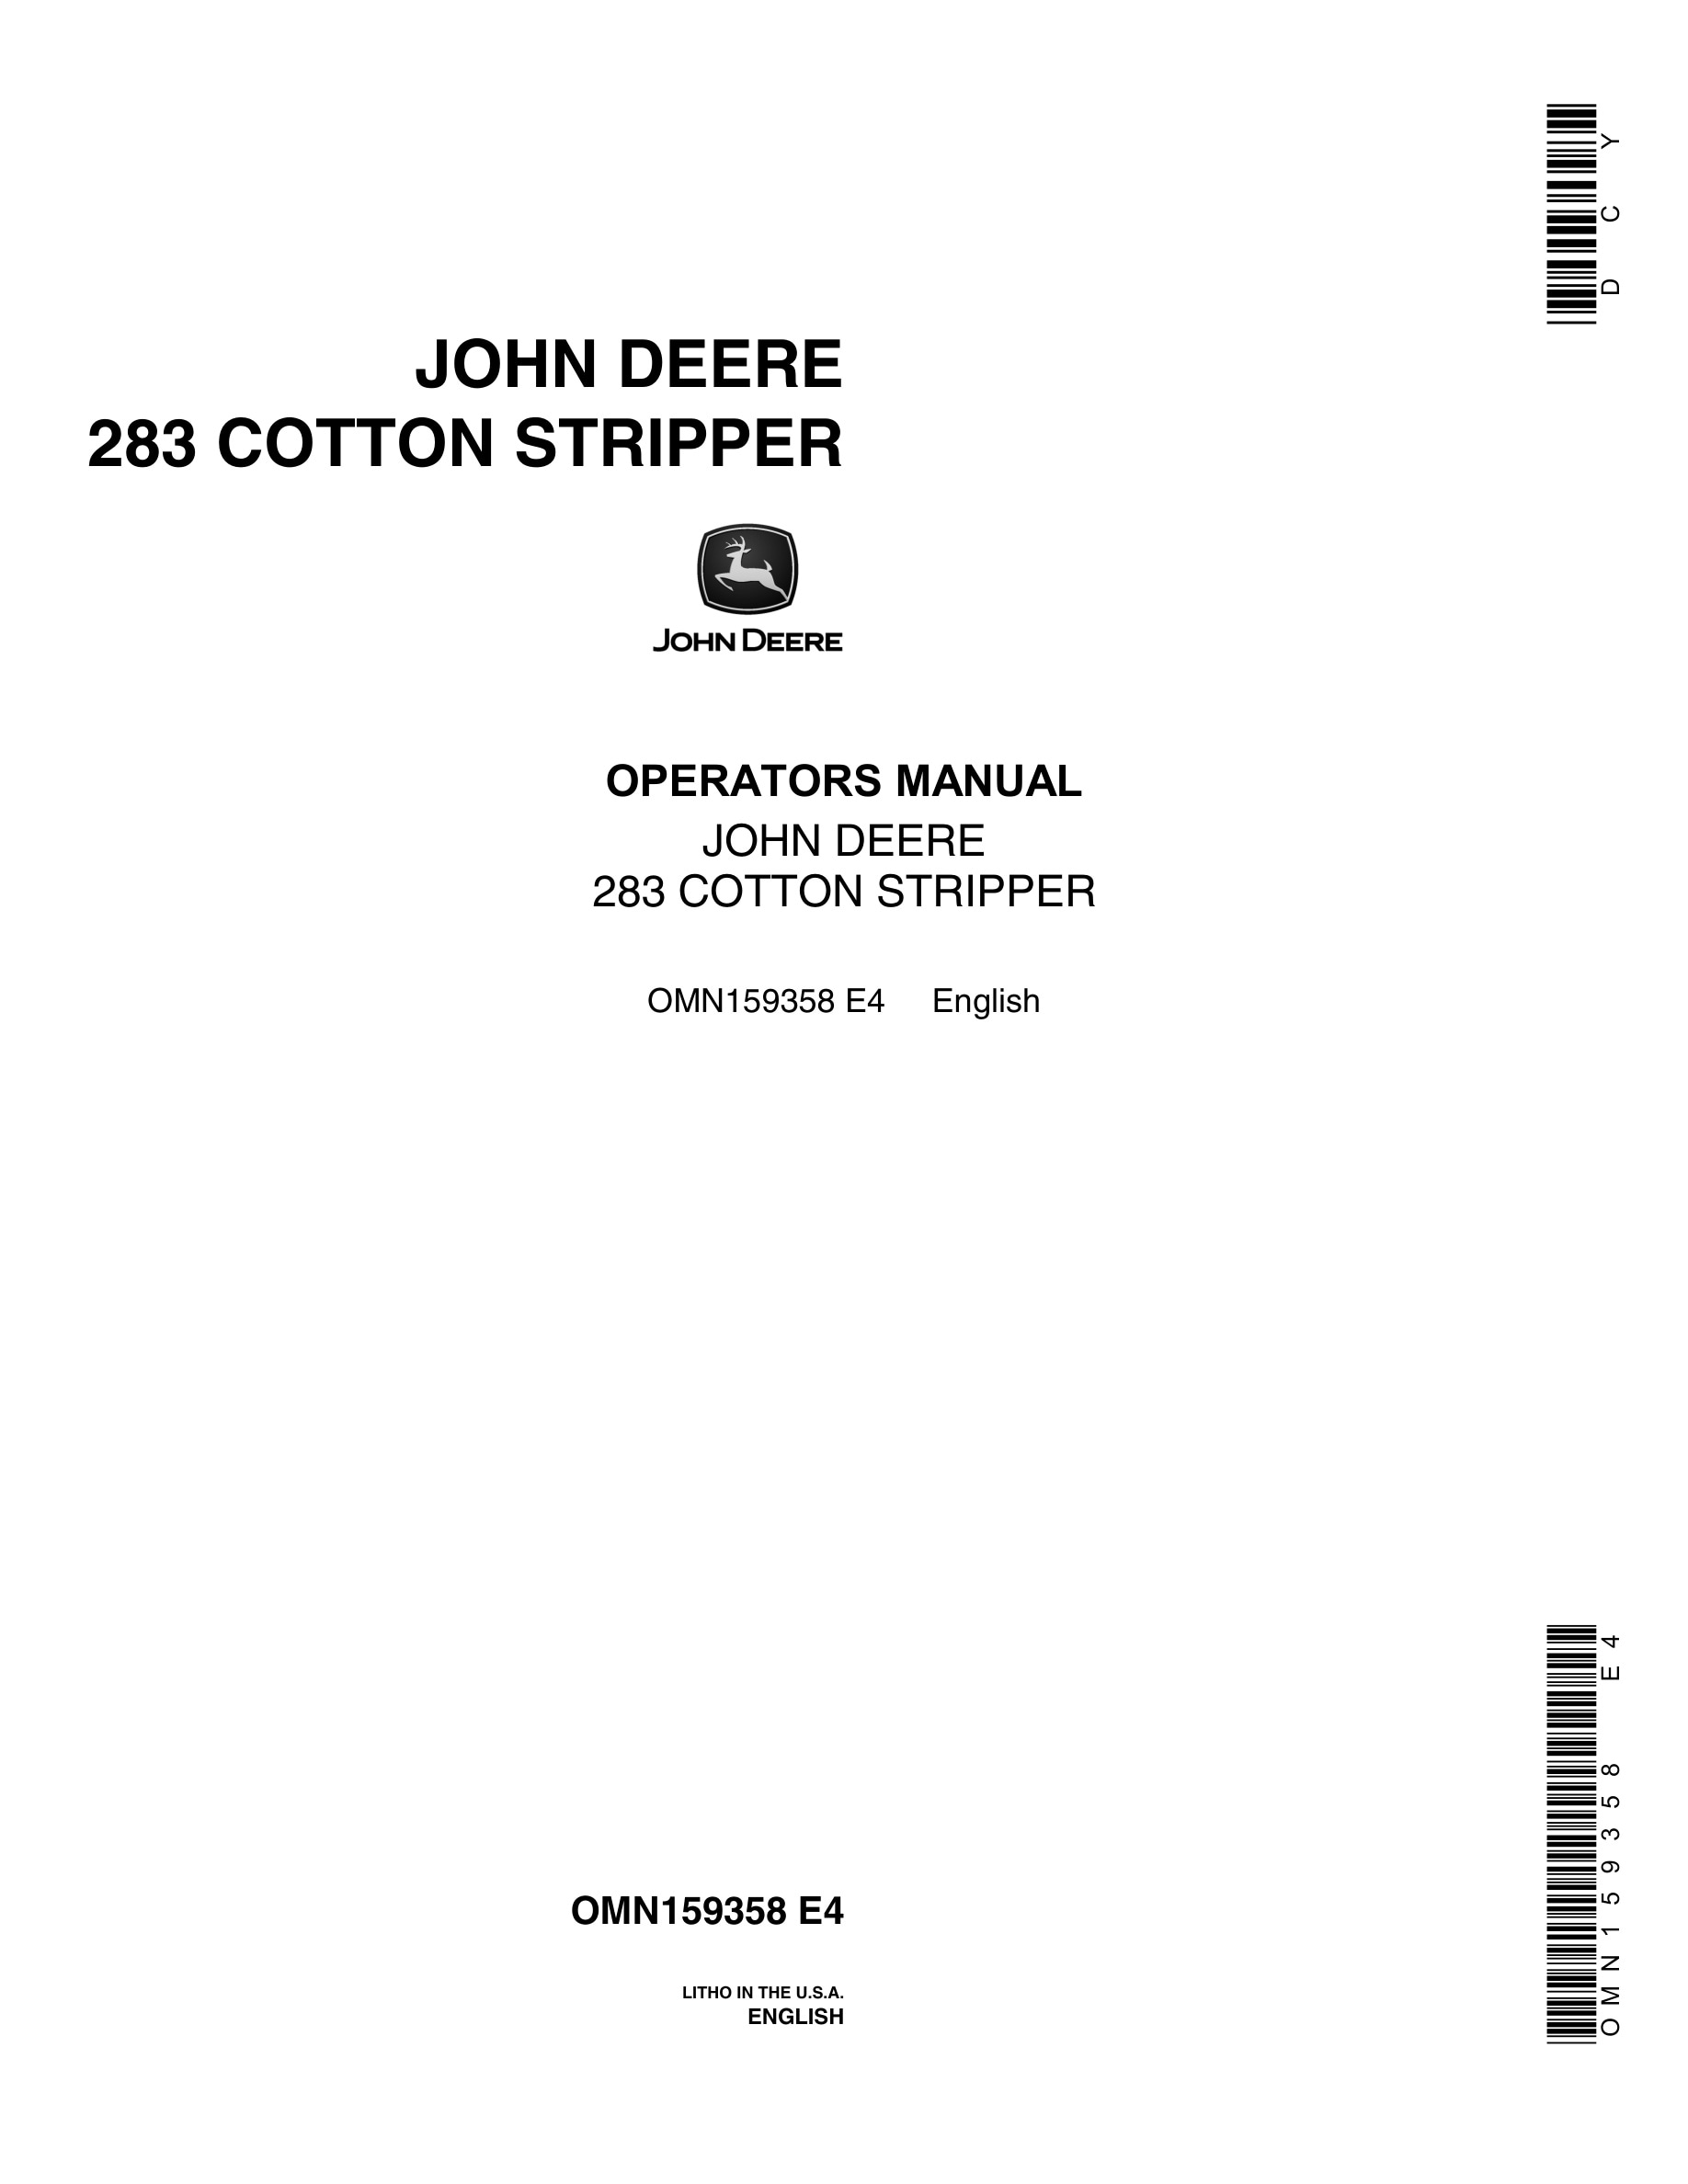 John Deere 283 Cotton Sripper Operator Manual OMN159358-1